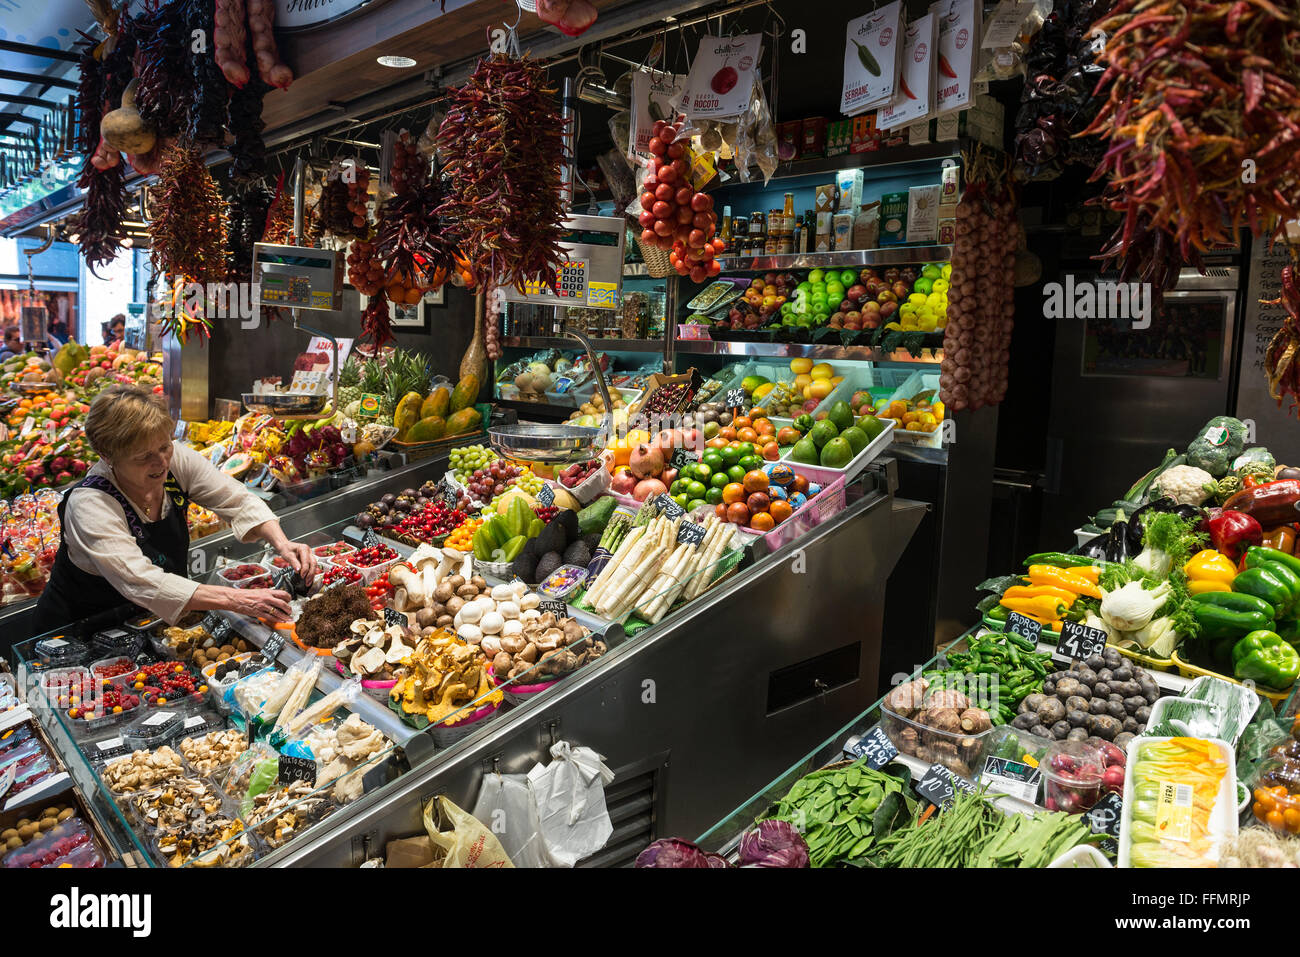 greengrocery stand at Mercat de Sant Josep de la Boqueria - famous public market, Ciutat Vella district, Barcelona, Spain Stock Photo